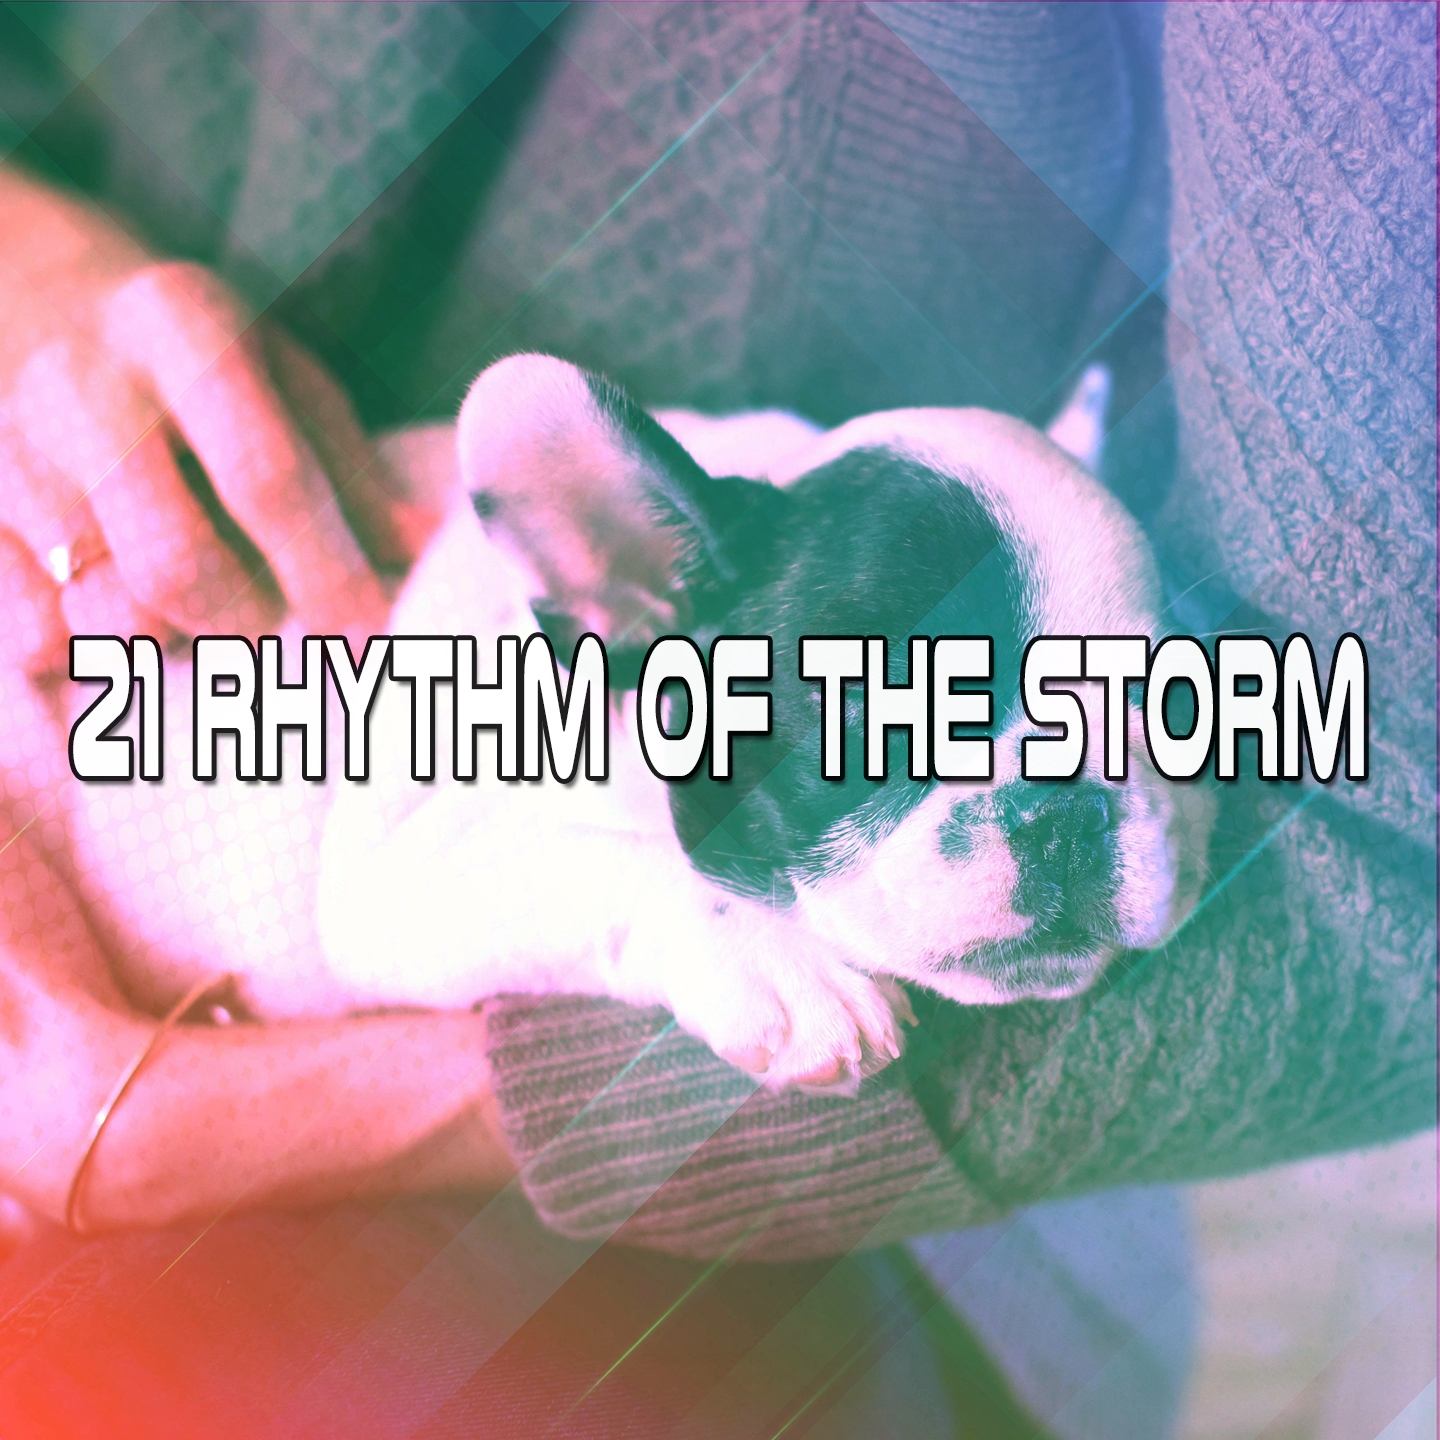 21 Rhythm of the Storm